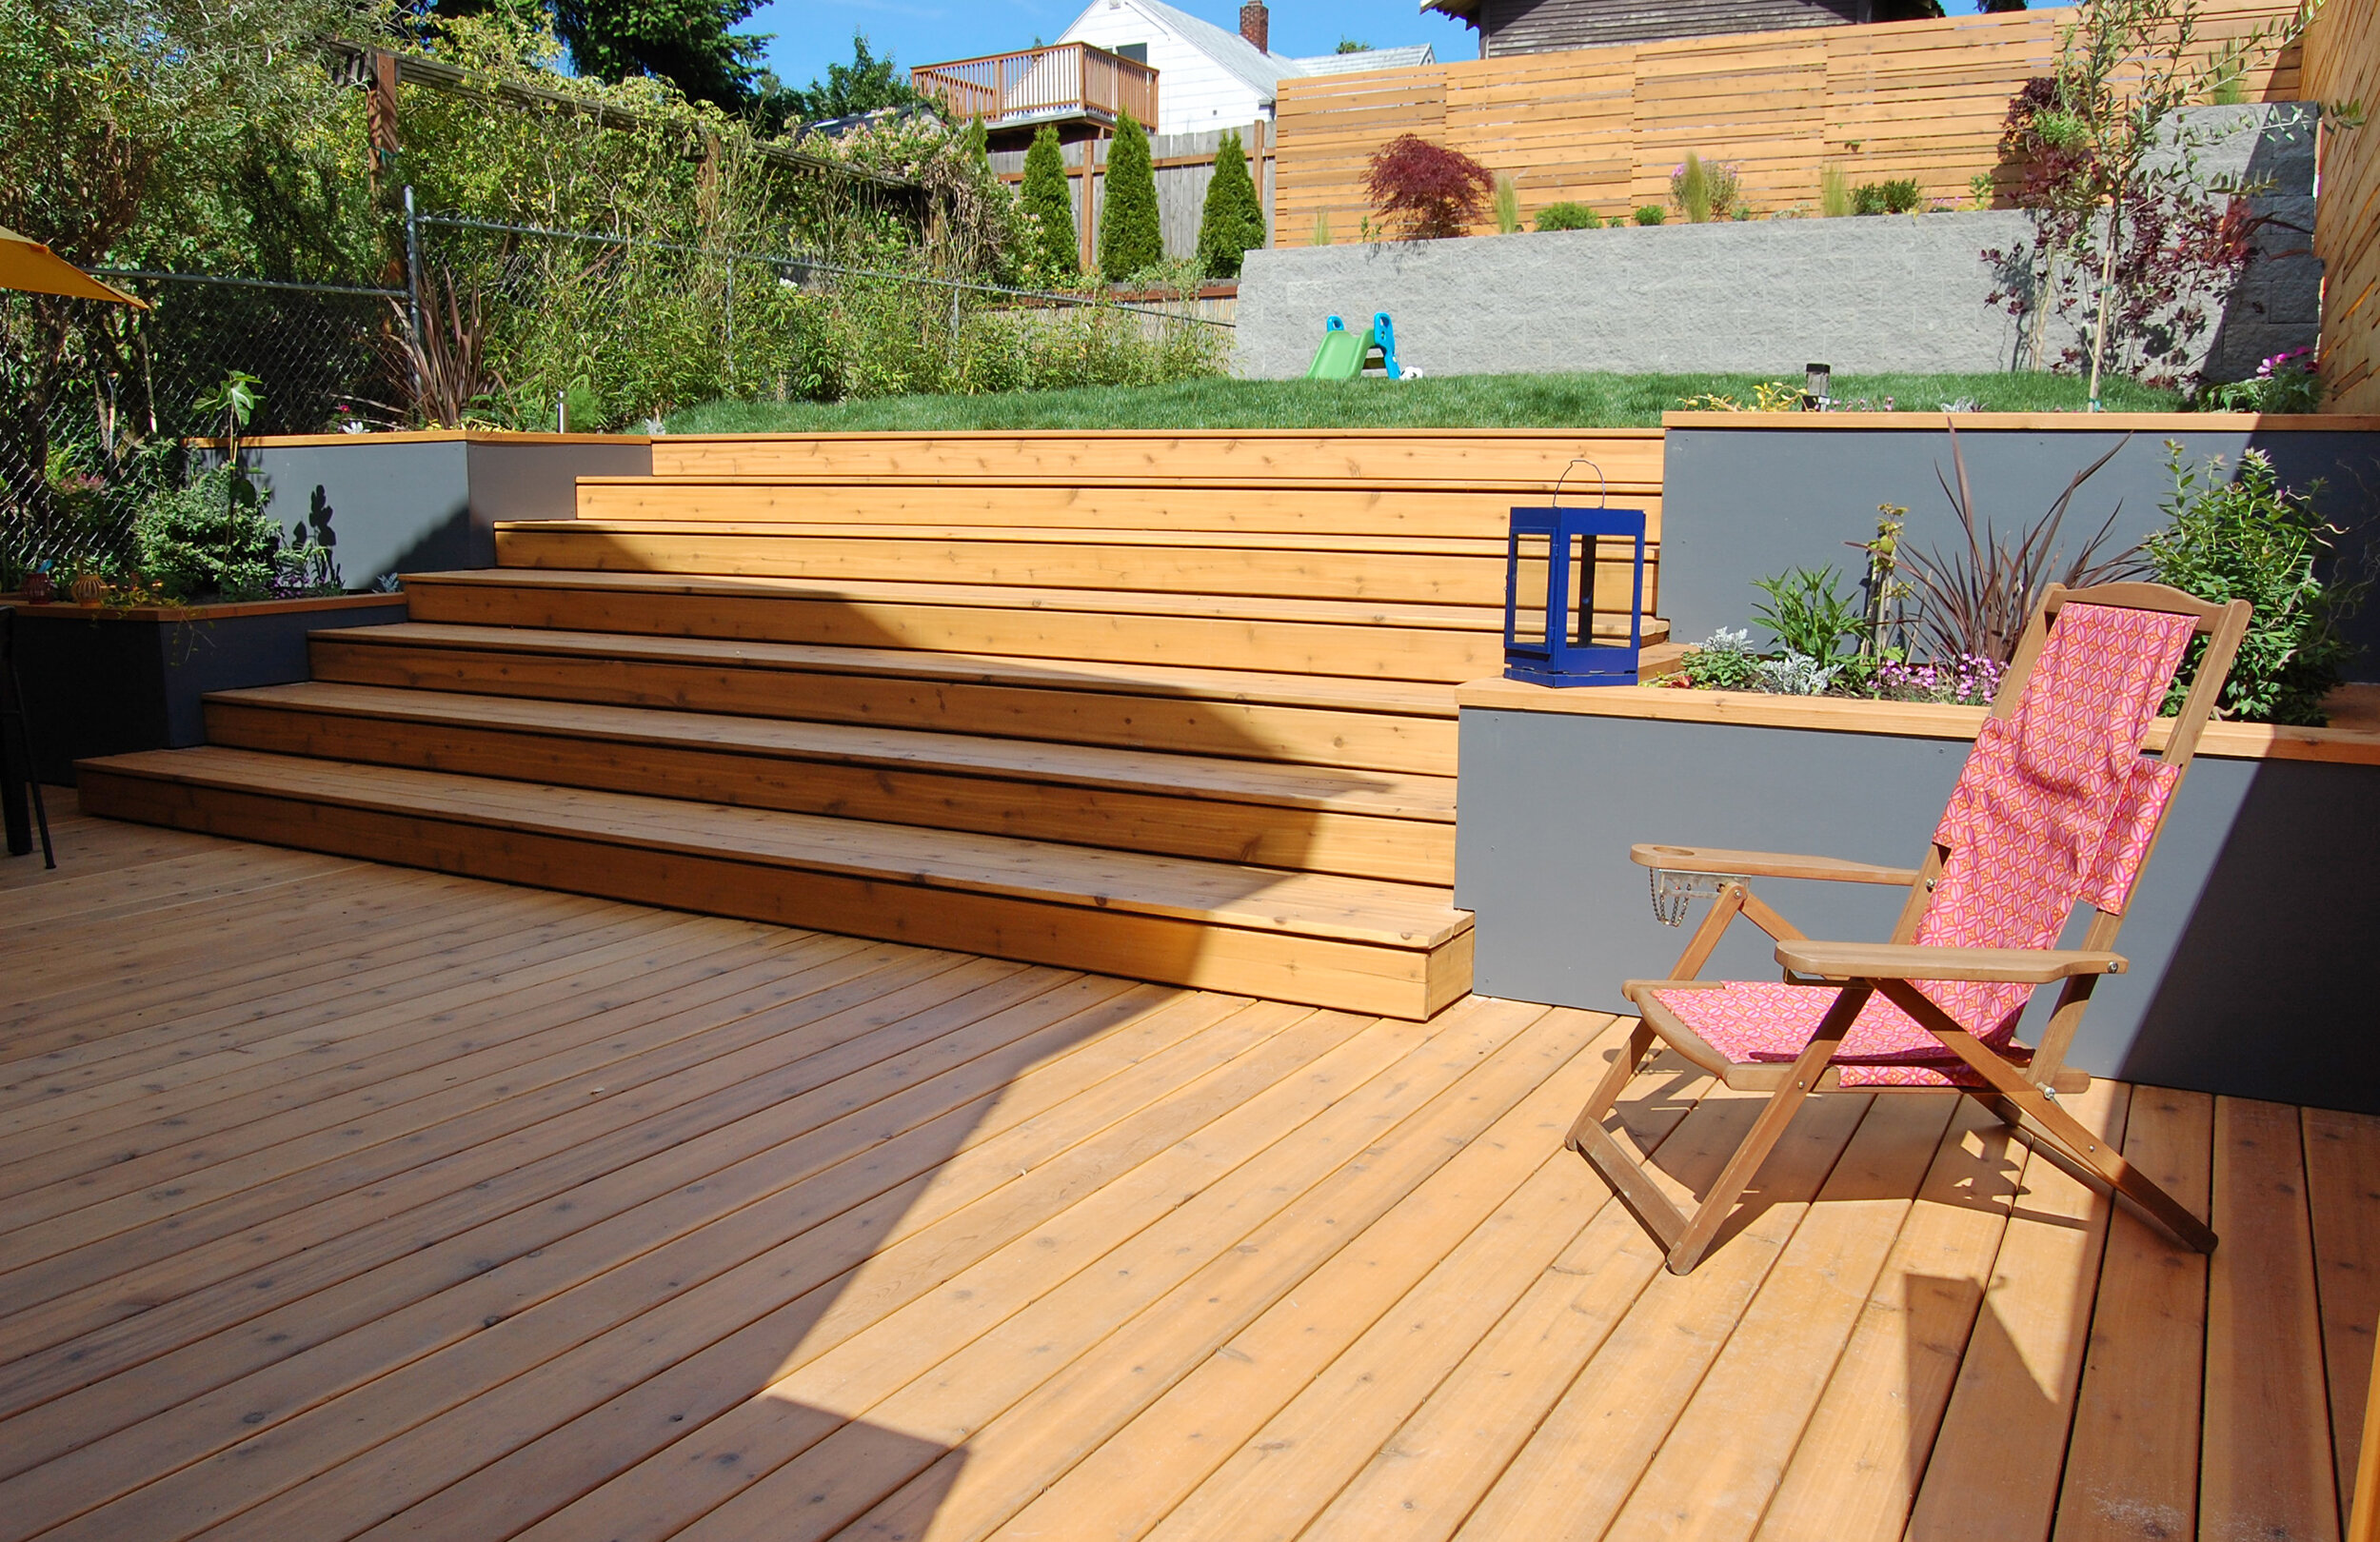 W21: Terraced Cedar Deck with Painted Hardie Board Planters